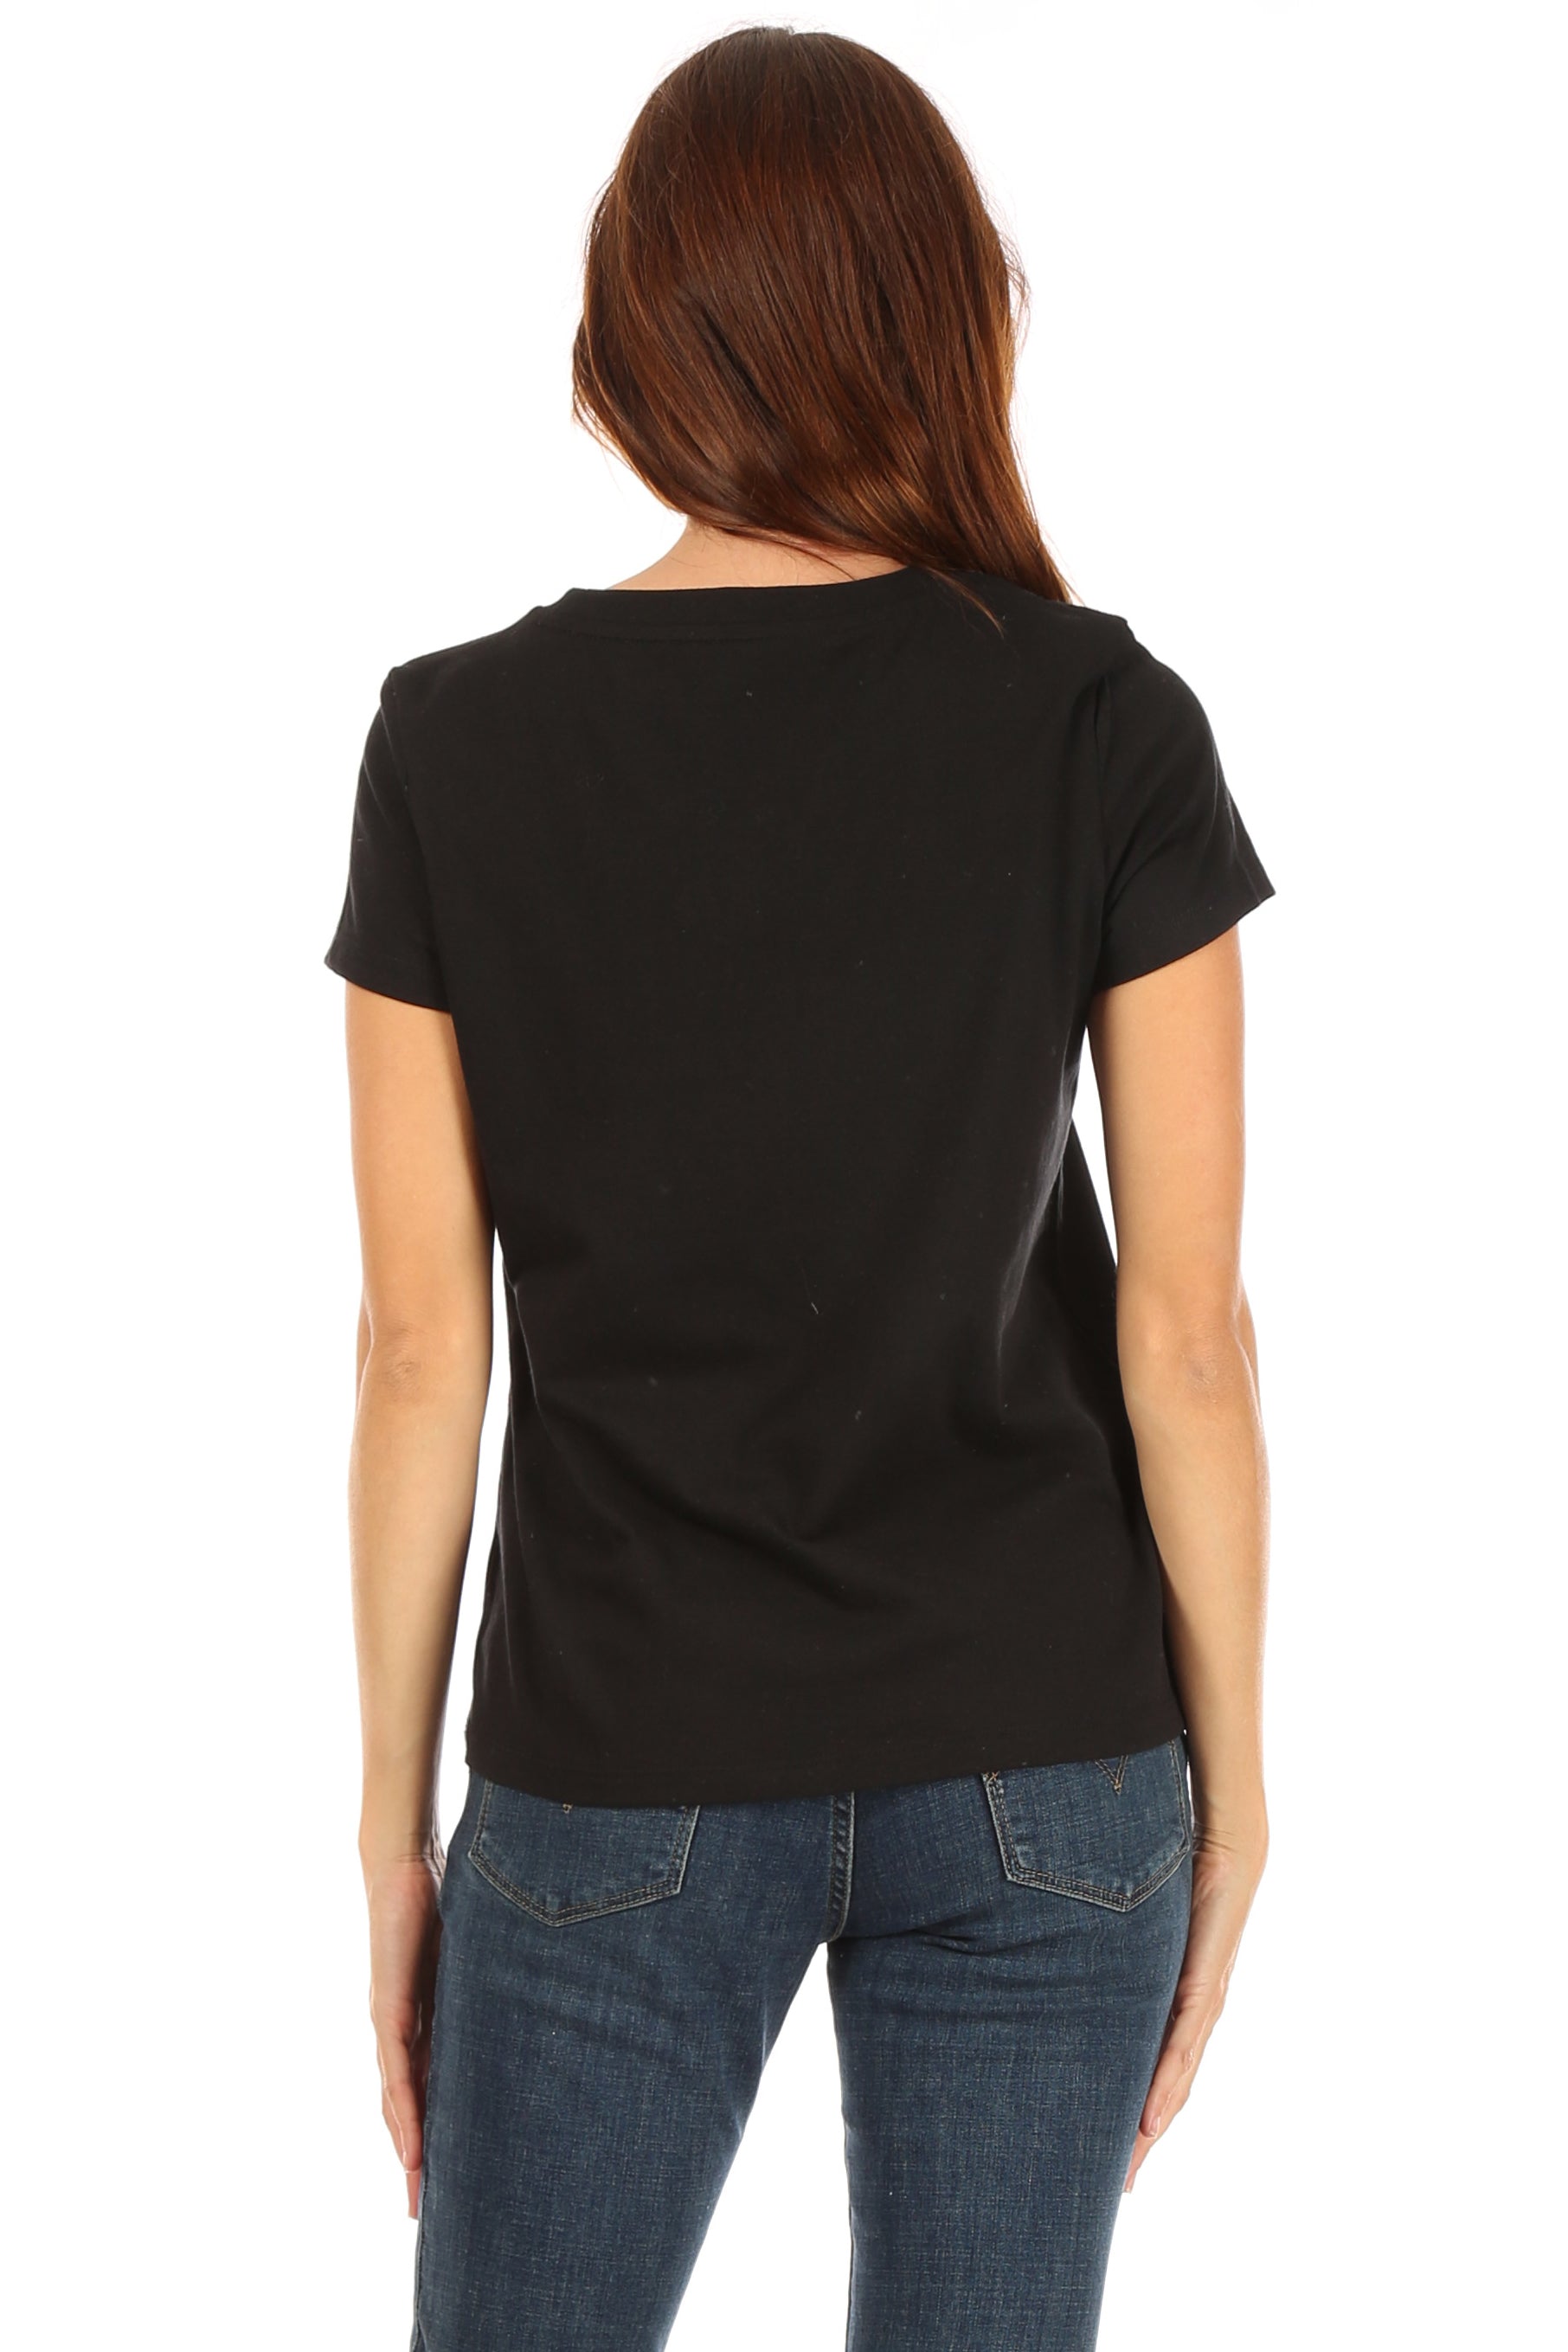 Women's "HAPPY" Short Sleeve Icon T-Shirt - Shop Rae Dunn Apparel and Sleepwear